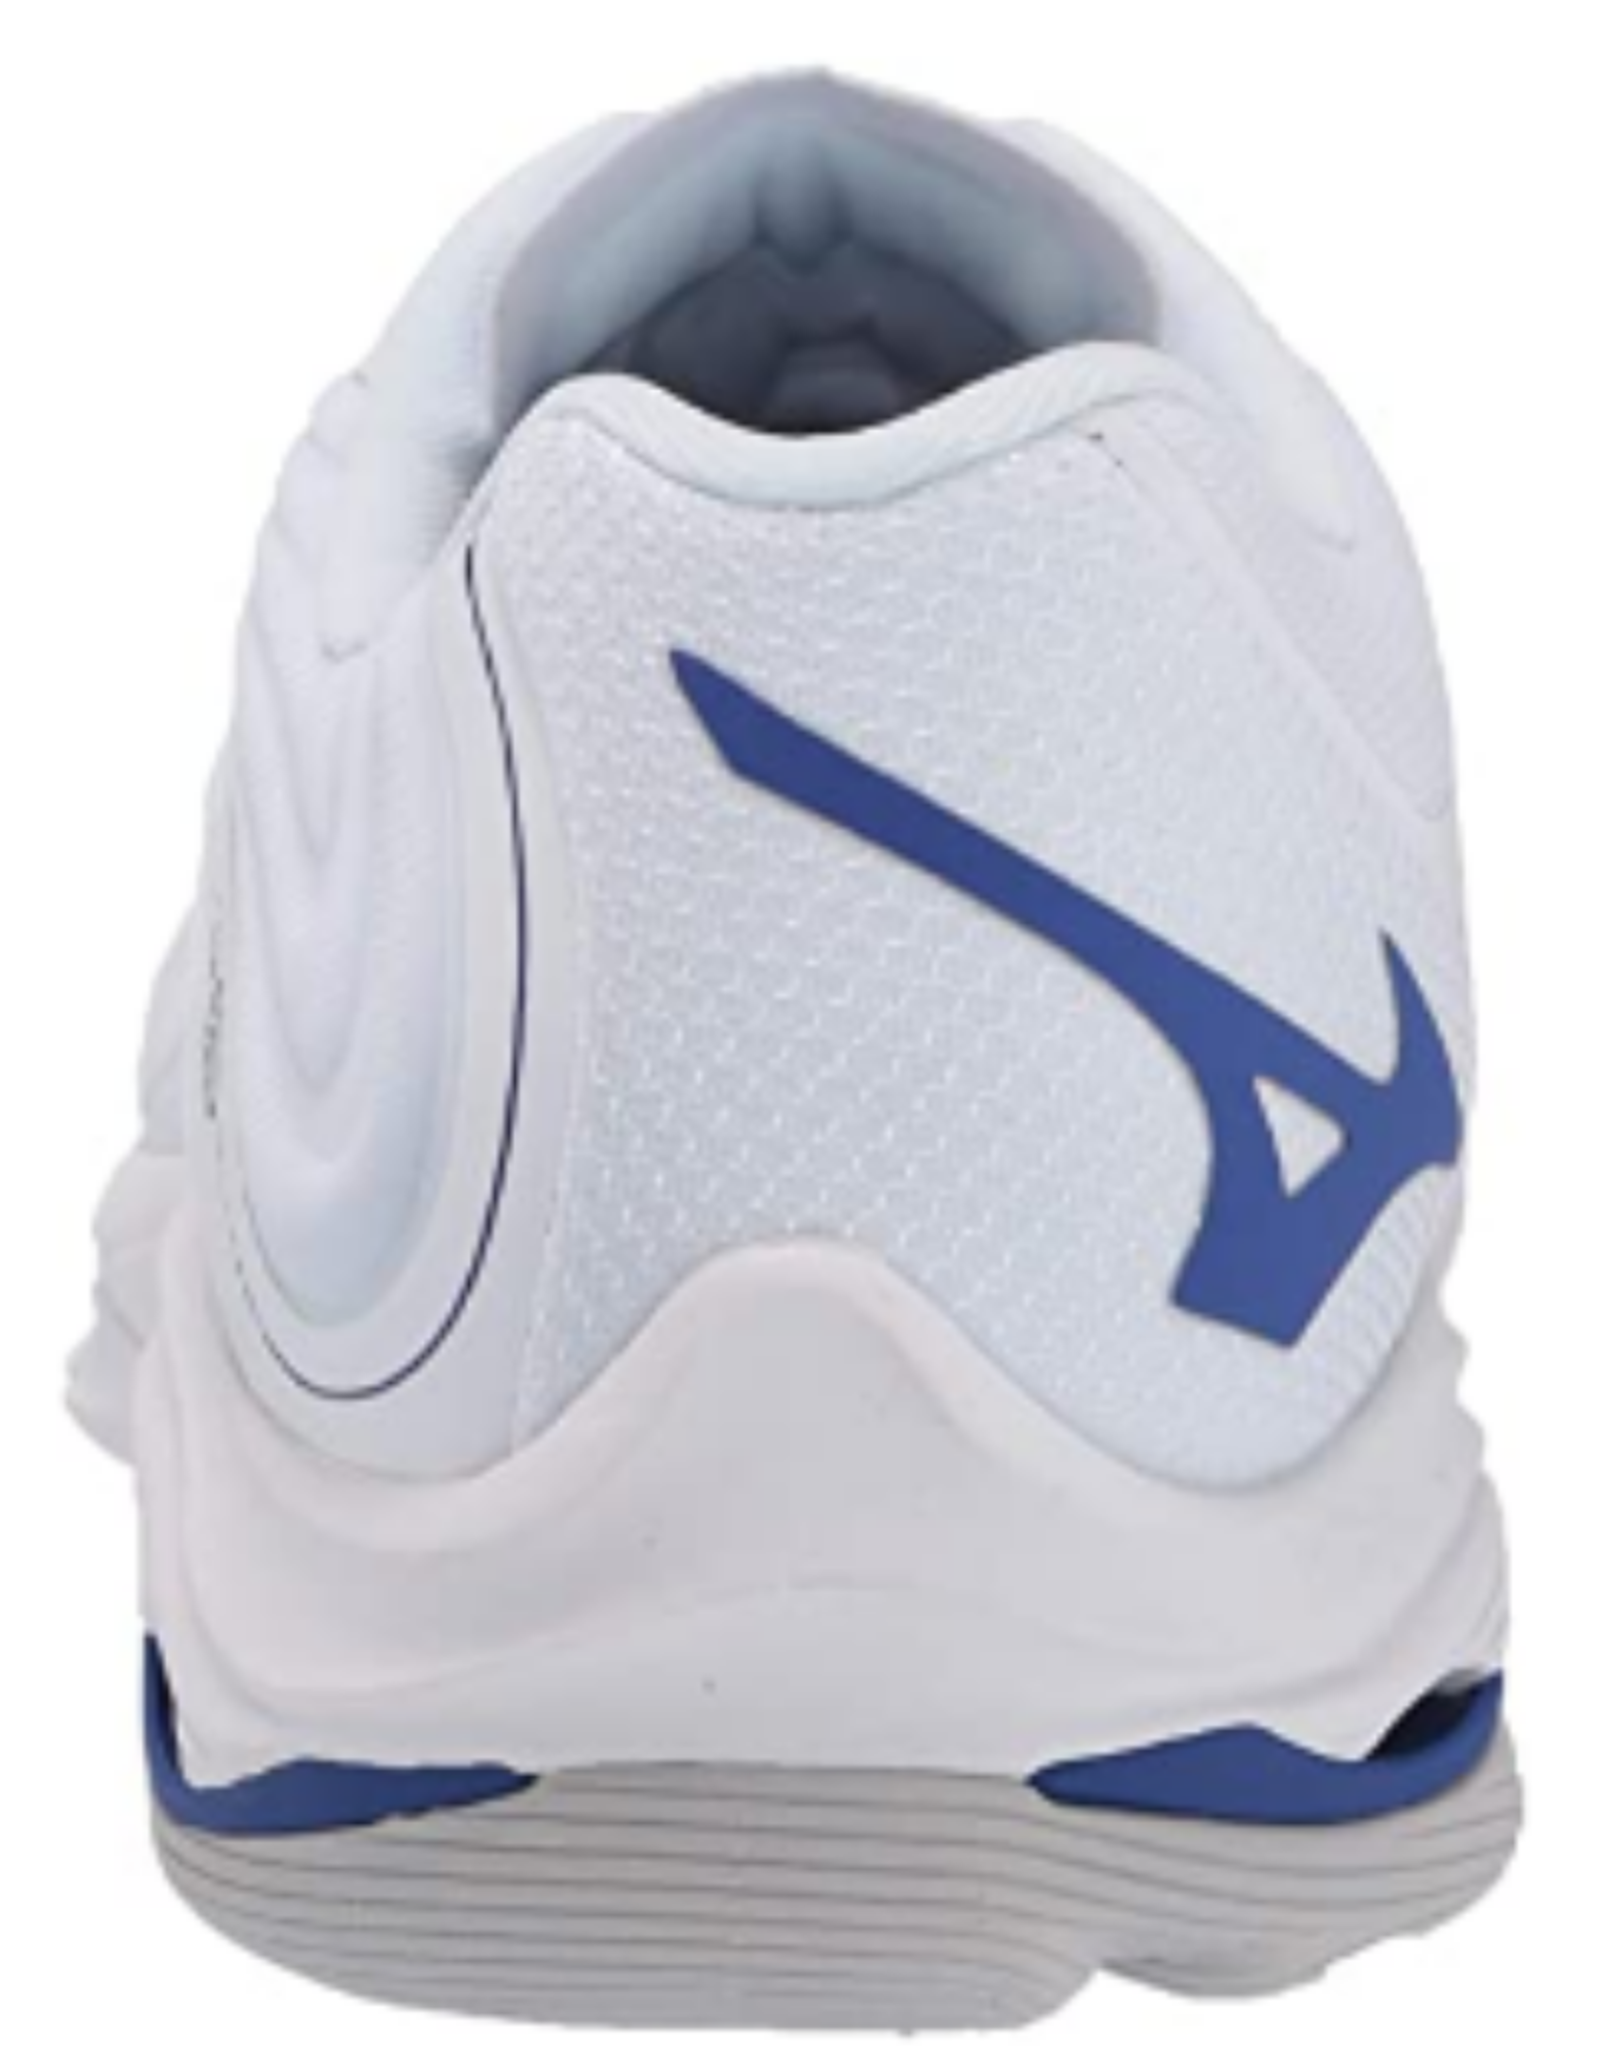 Mizuno Women's Wave Lightning Z6 Shoe White/Blue